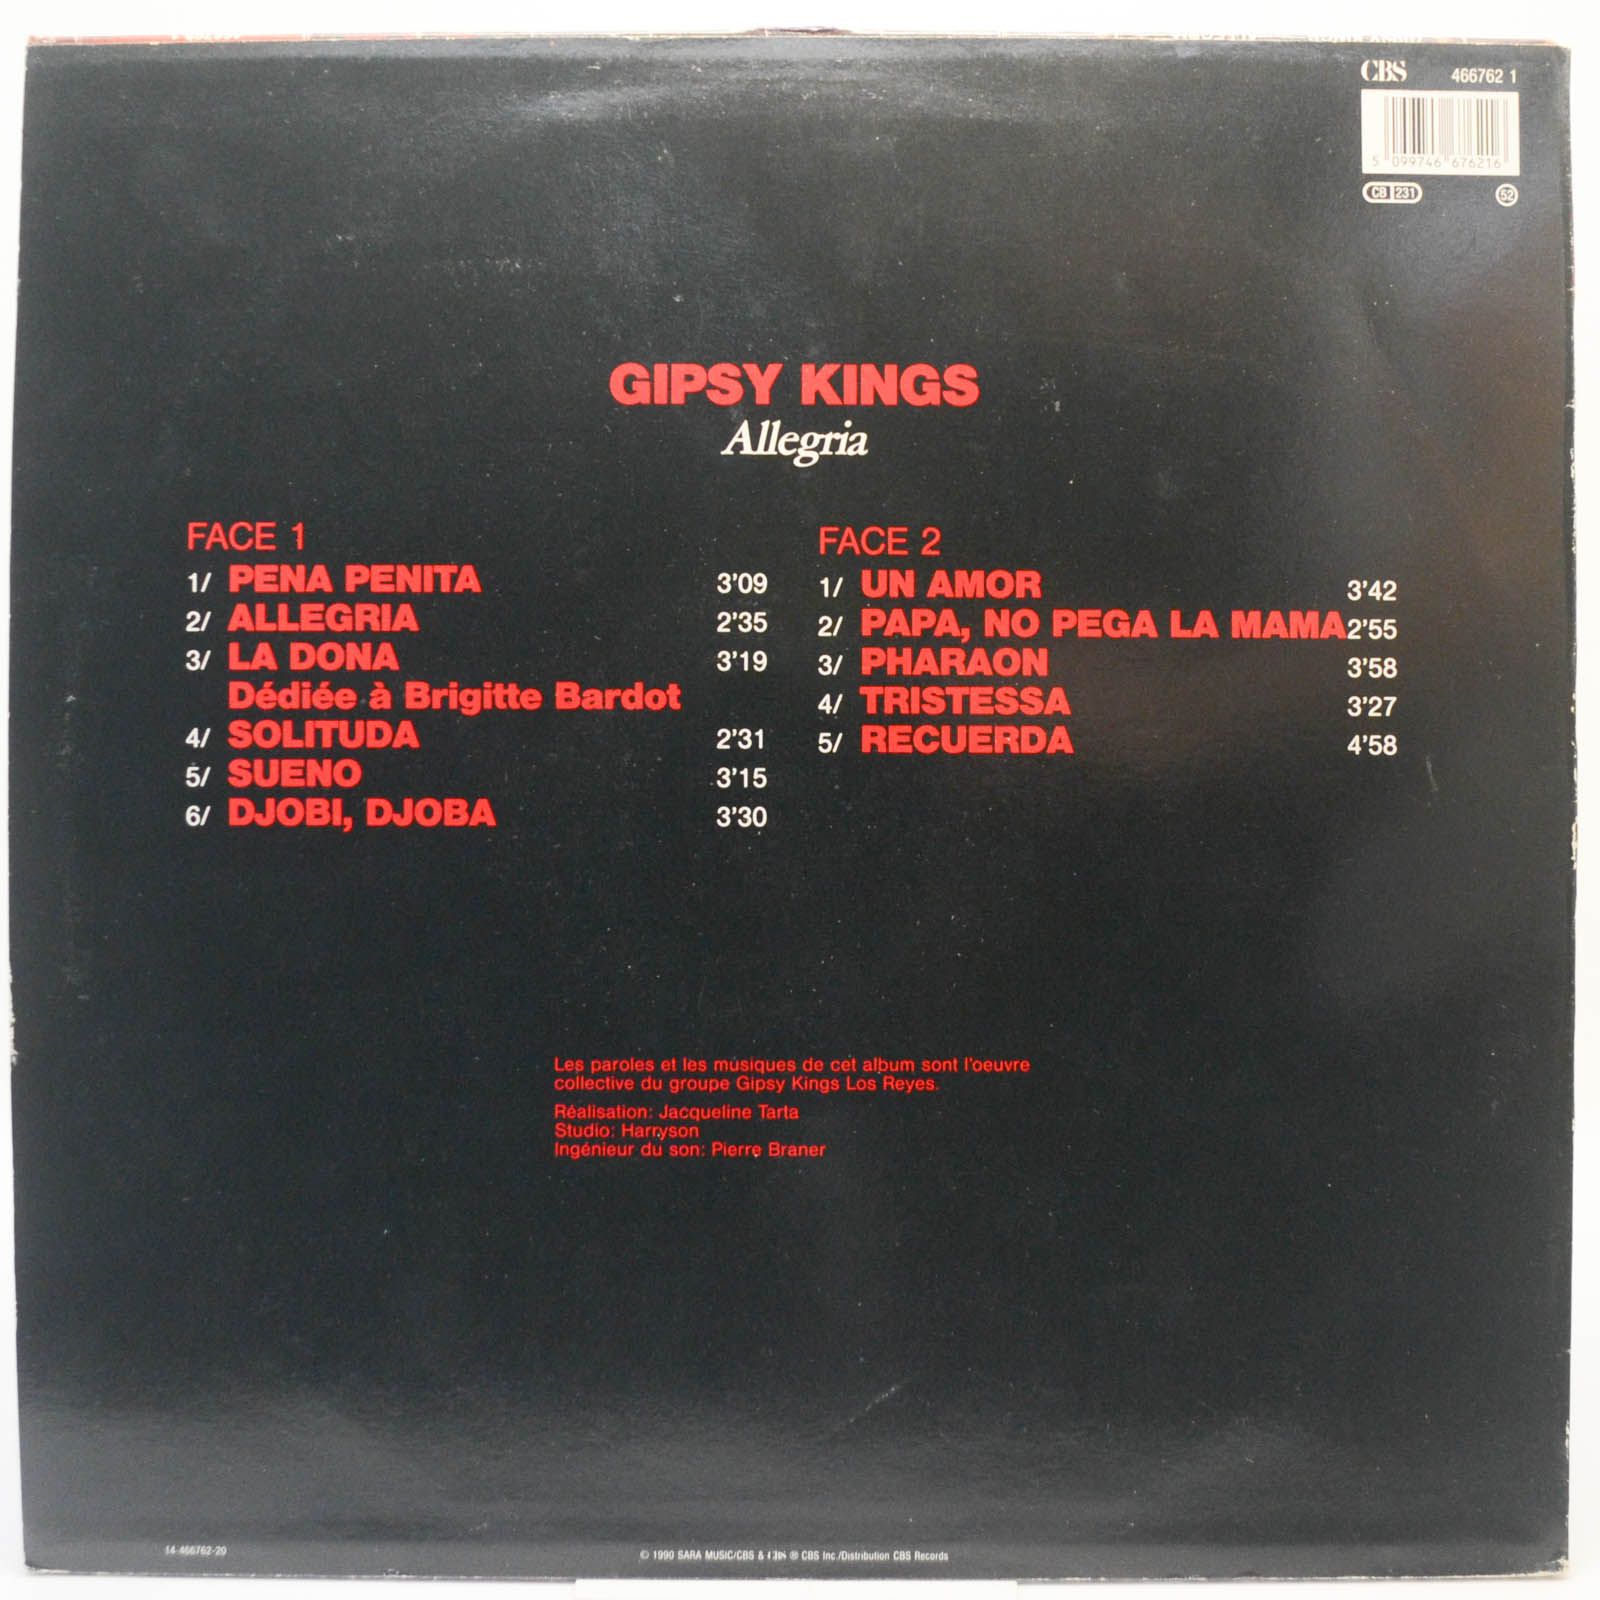 Gipsy Kings — Allegria, 1990